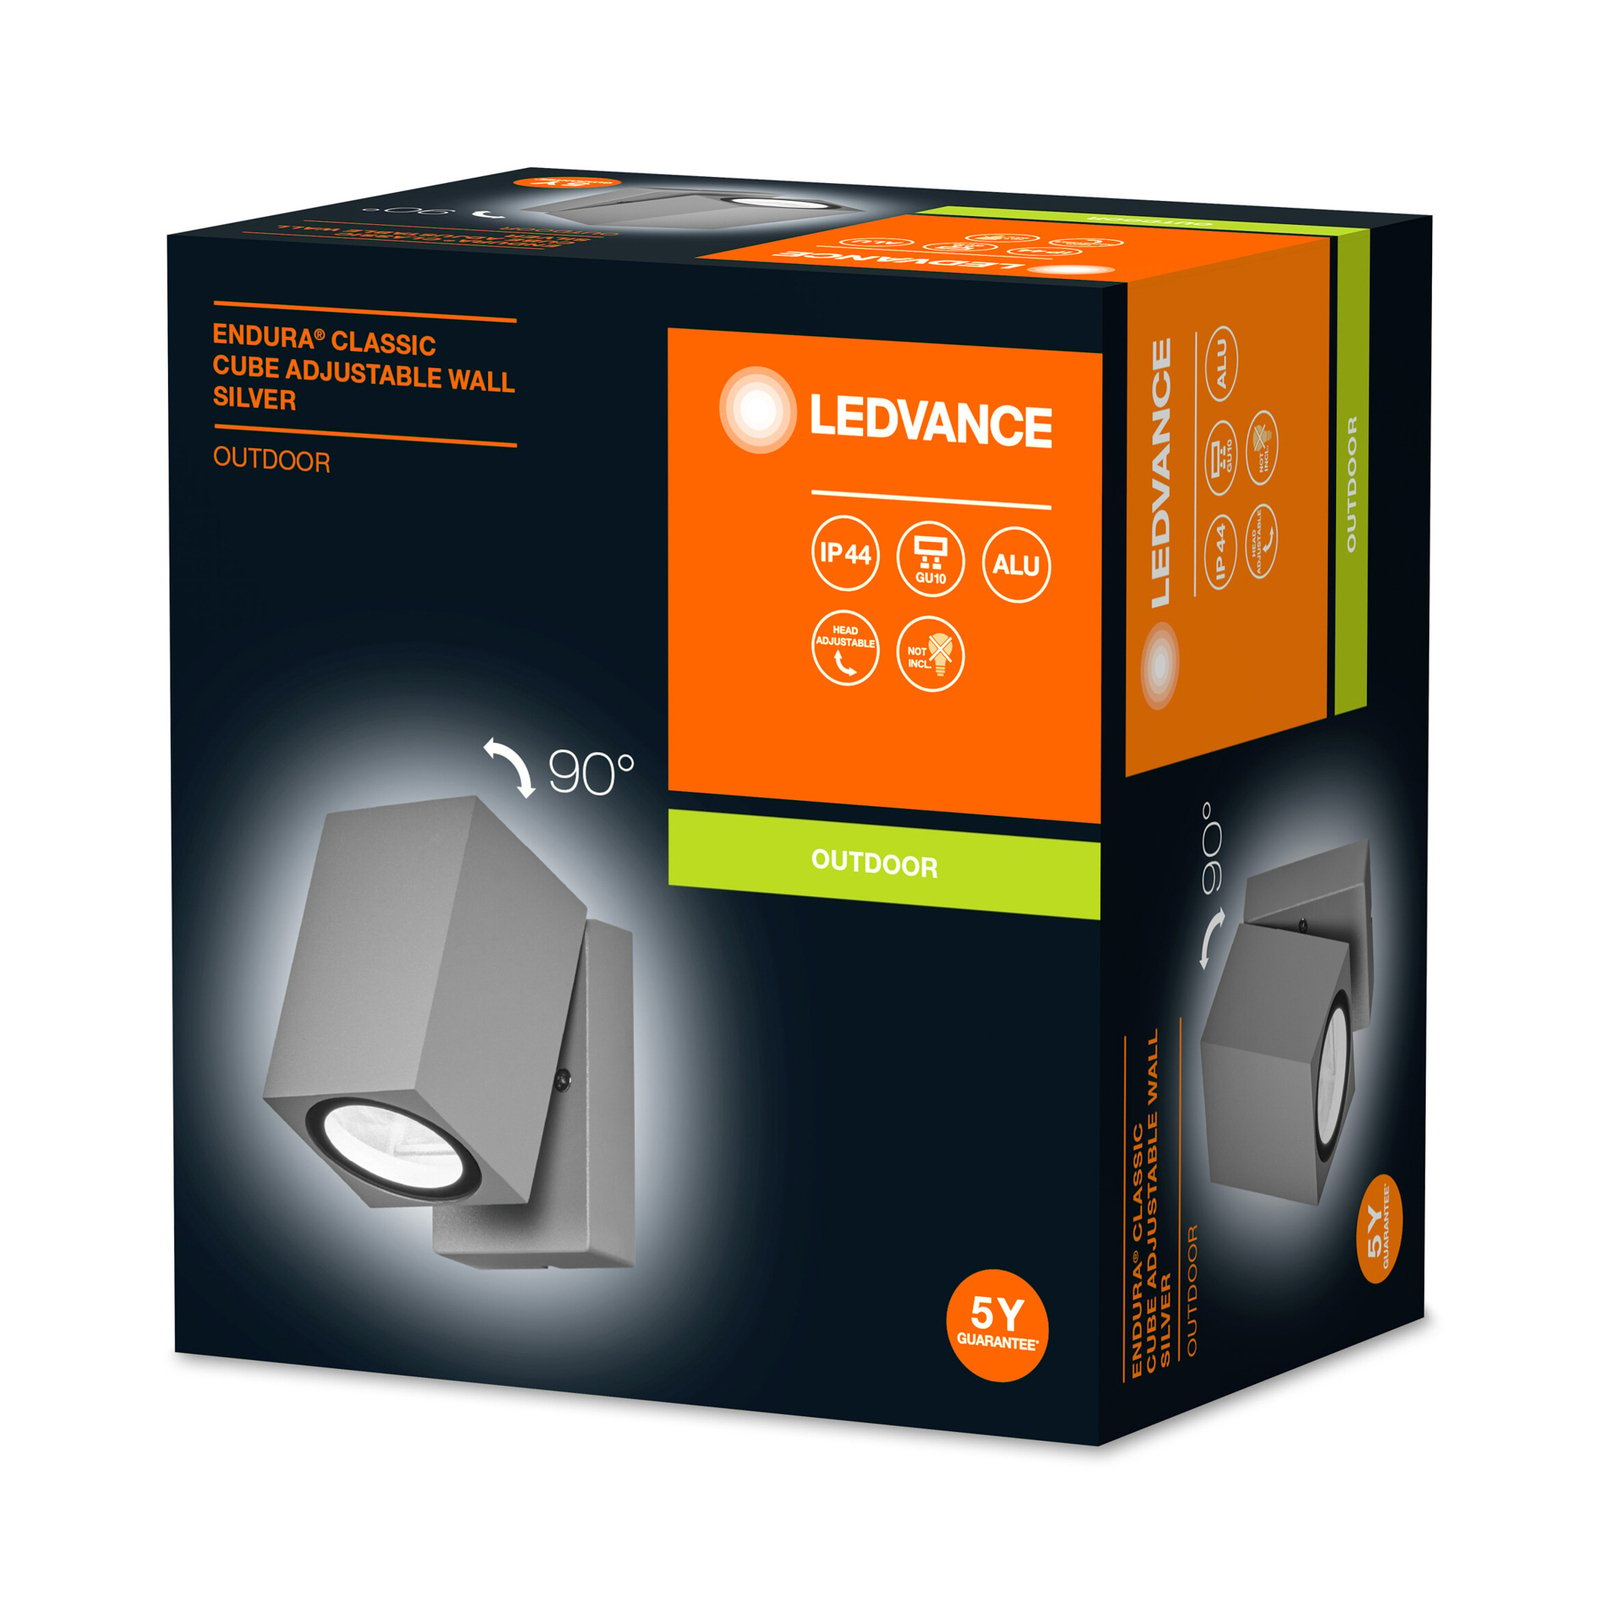 LEDVANCE Endura Classic Cube aplică ext. argintiu